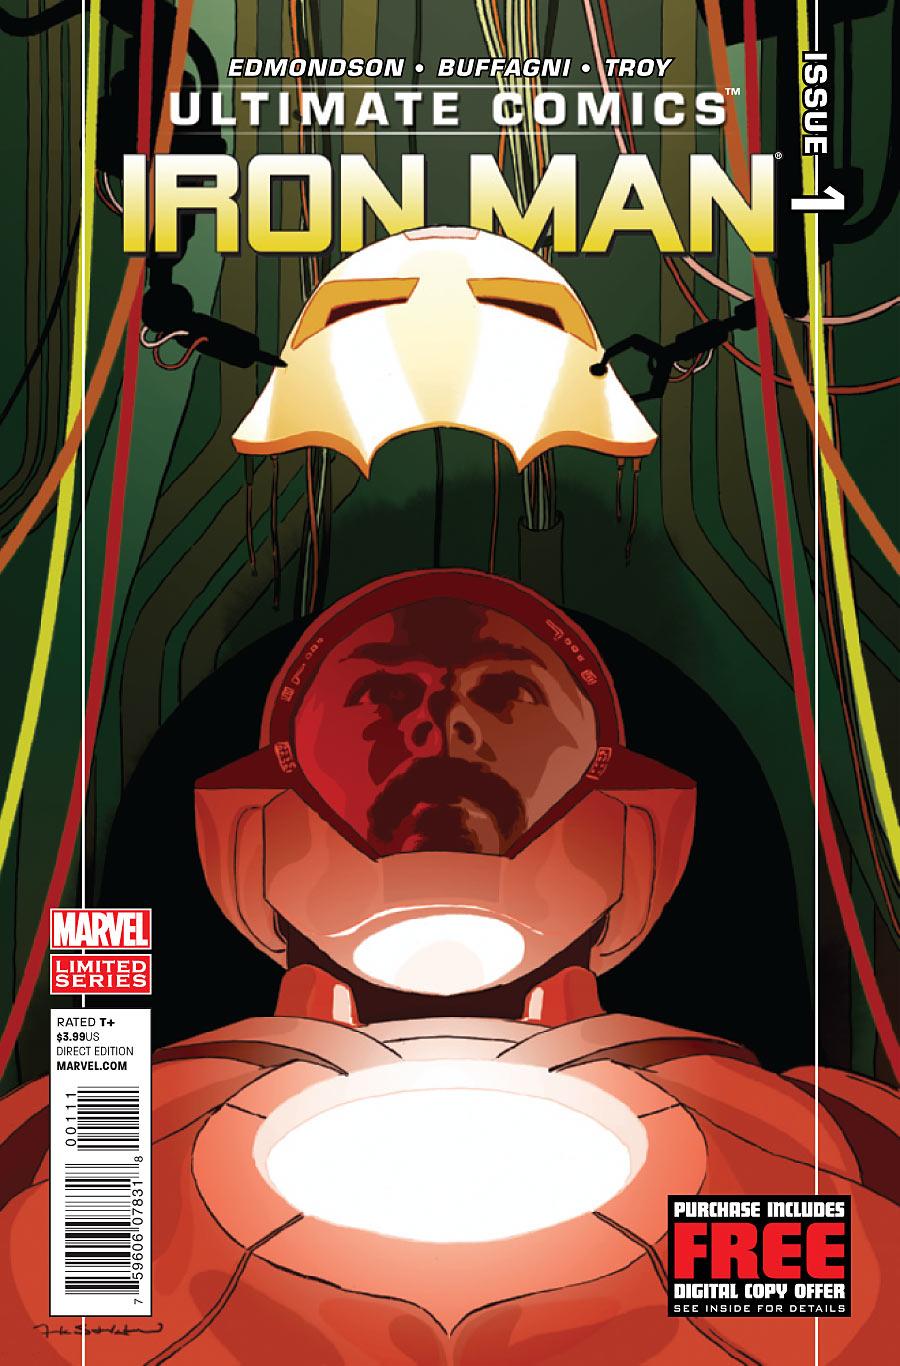 Ultimate Comics Iron Man Vol. 1 #1